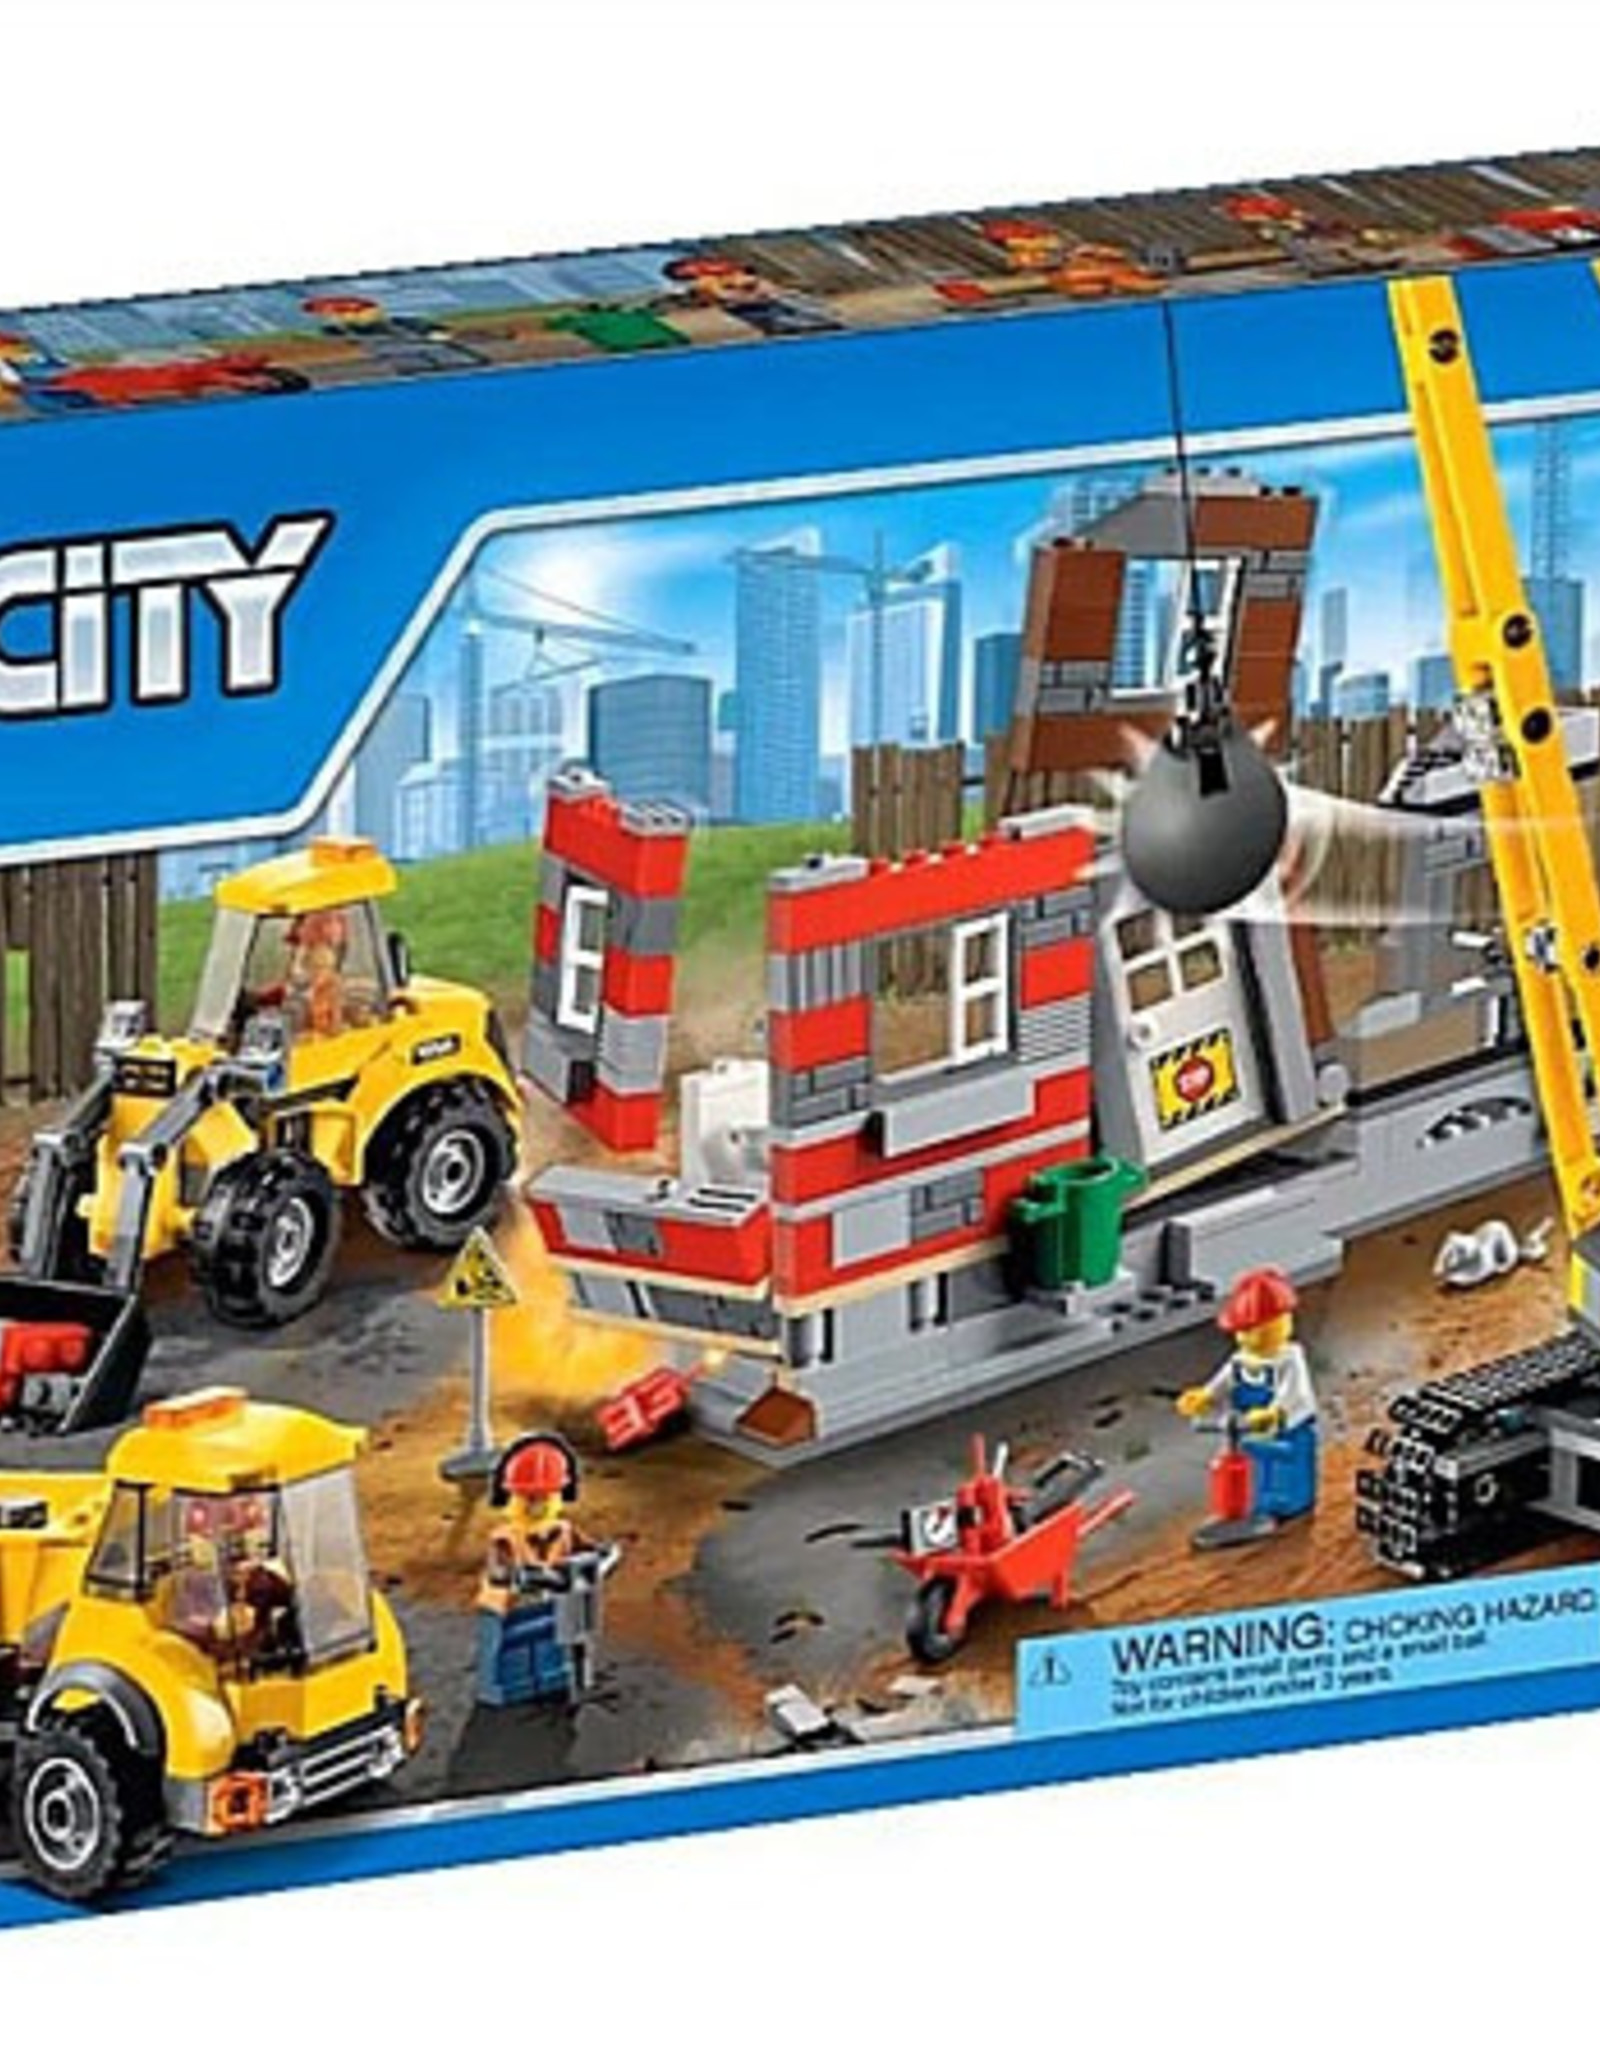 LEGO LEGO 60076 Demolition Site CITY